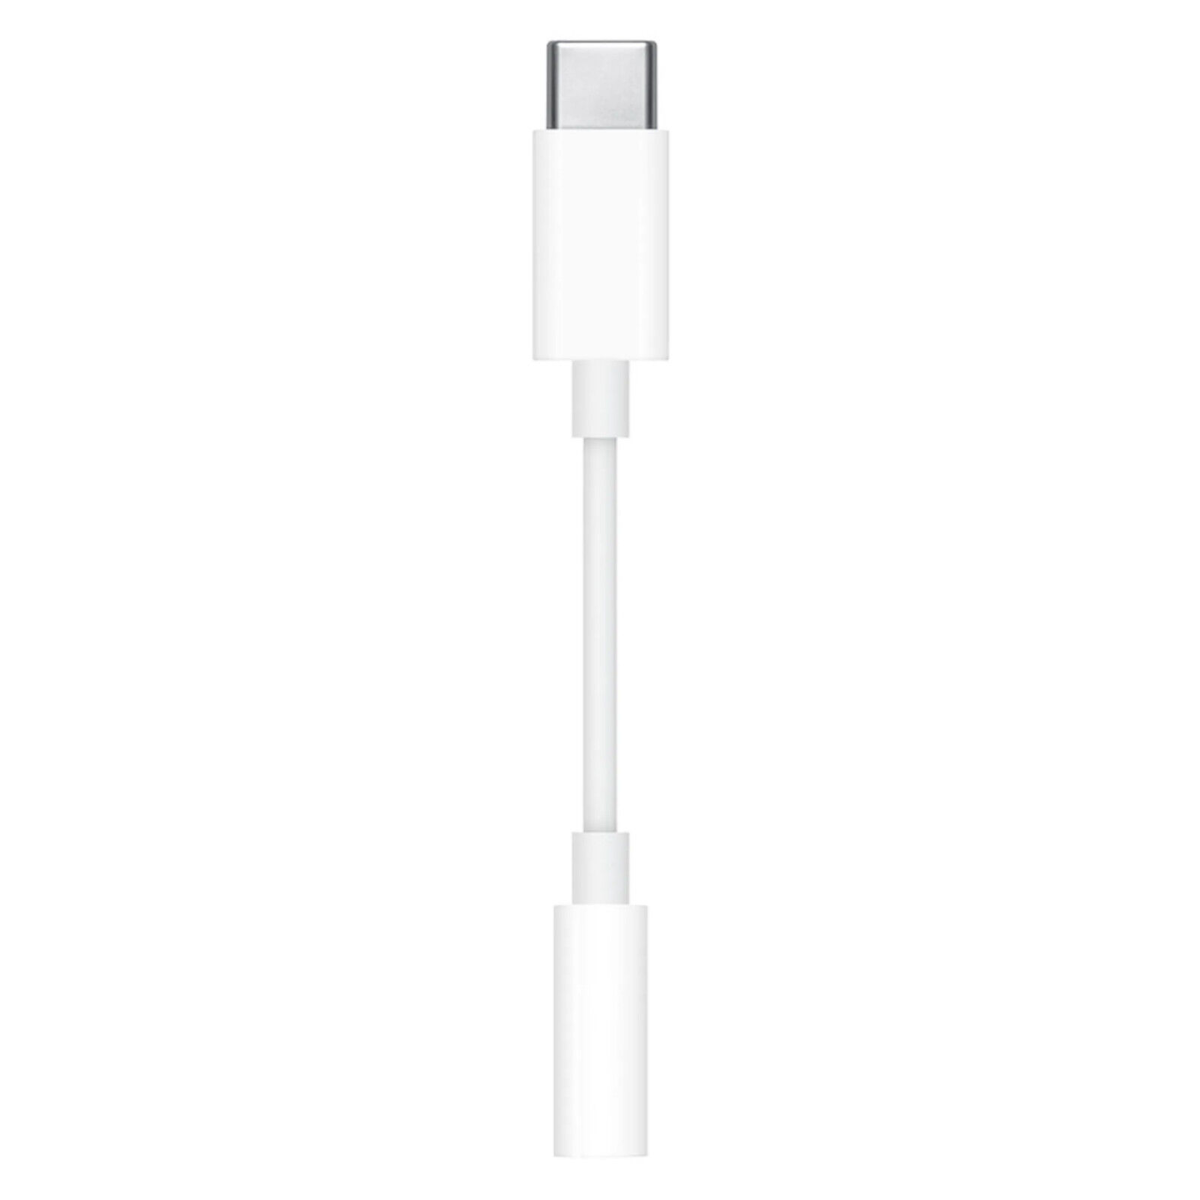 Audio Kopfhörer Typ 3,5 für 15 iPad AUX Buchse Adapter Audio Adapter FIRELIA iPhone Stecker USB-C C